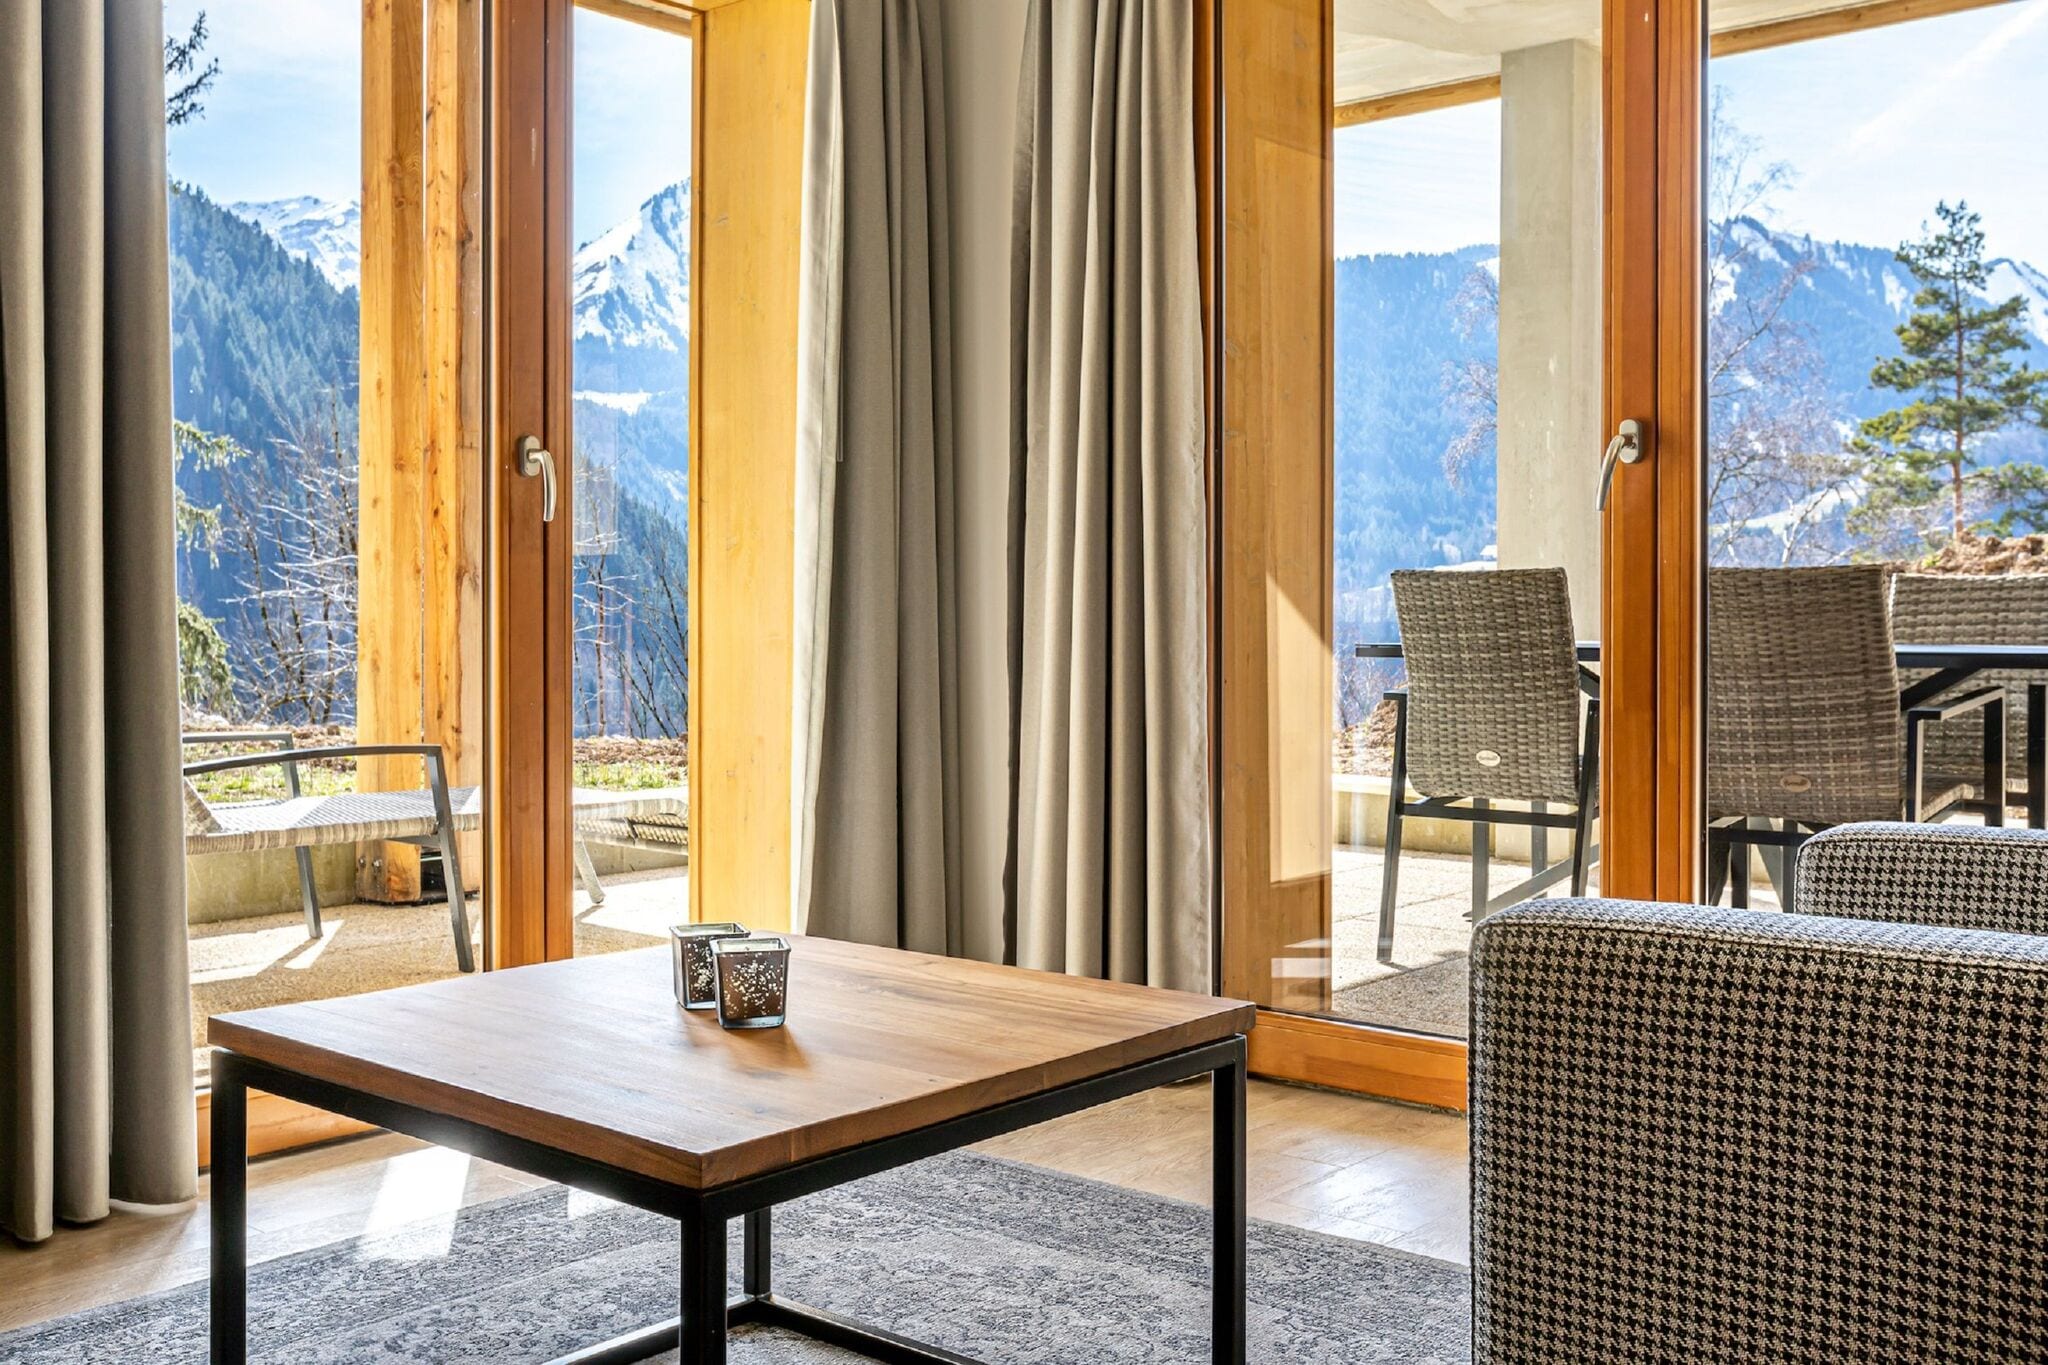 Luxurious apartment with Smart TV, ski lift 1.5 km away.